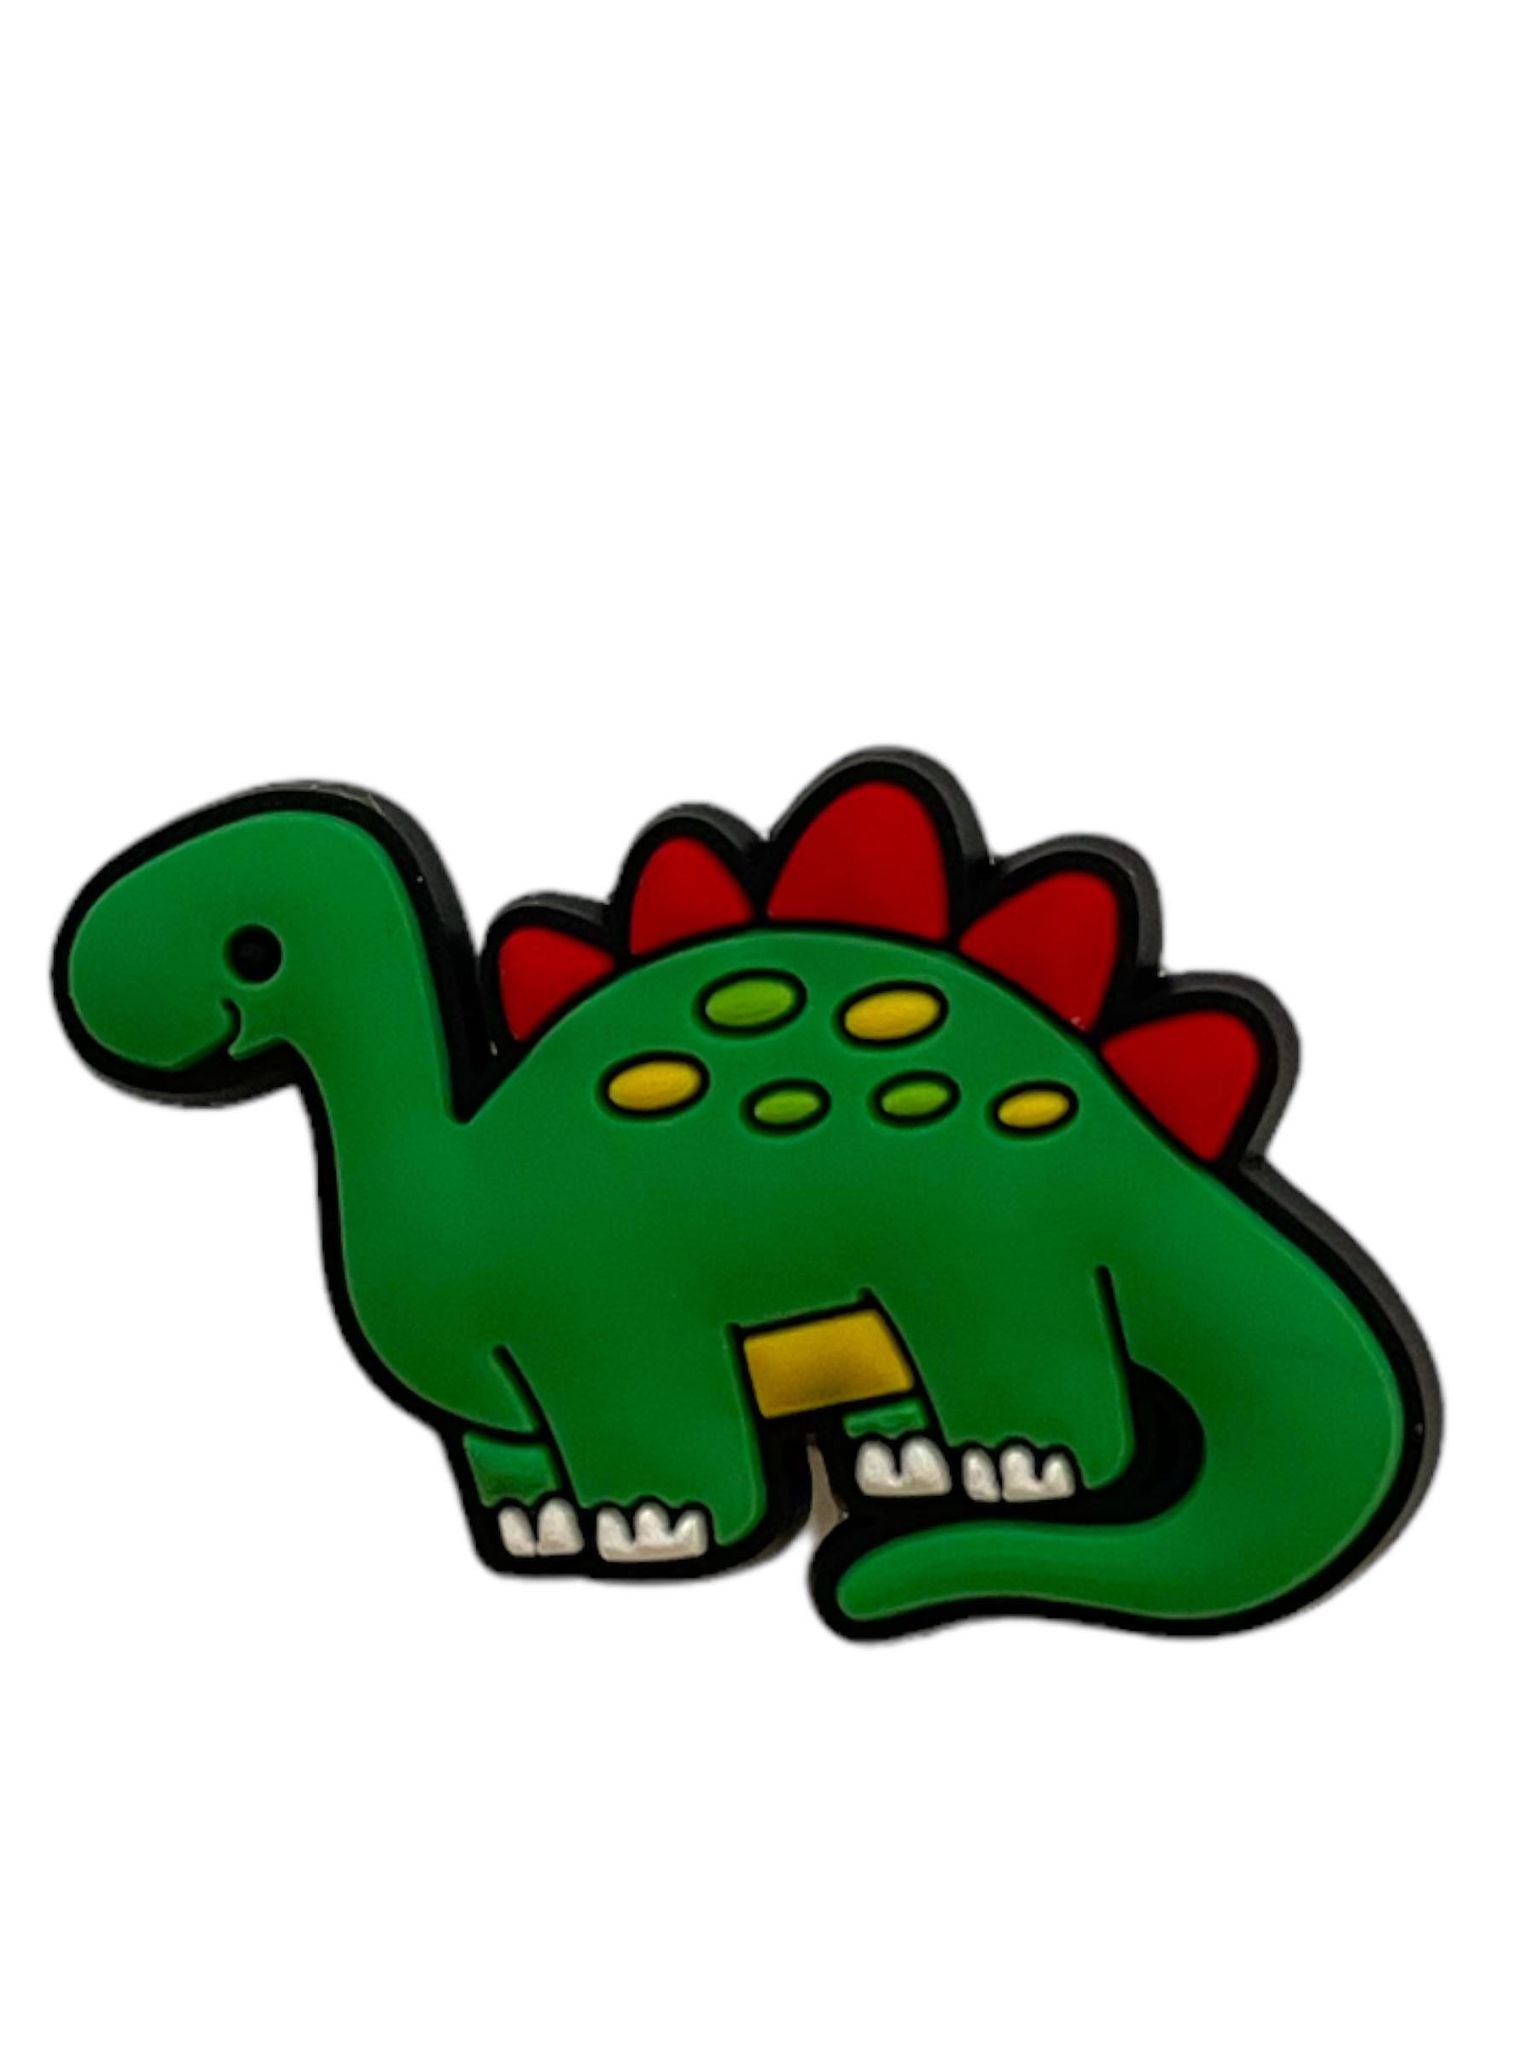 Green and Red Stegosaurus Croc Charm